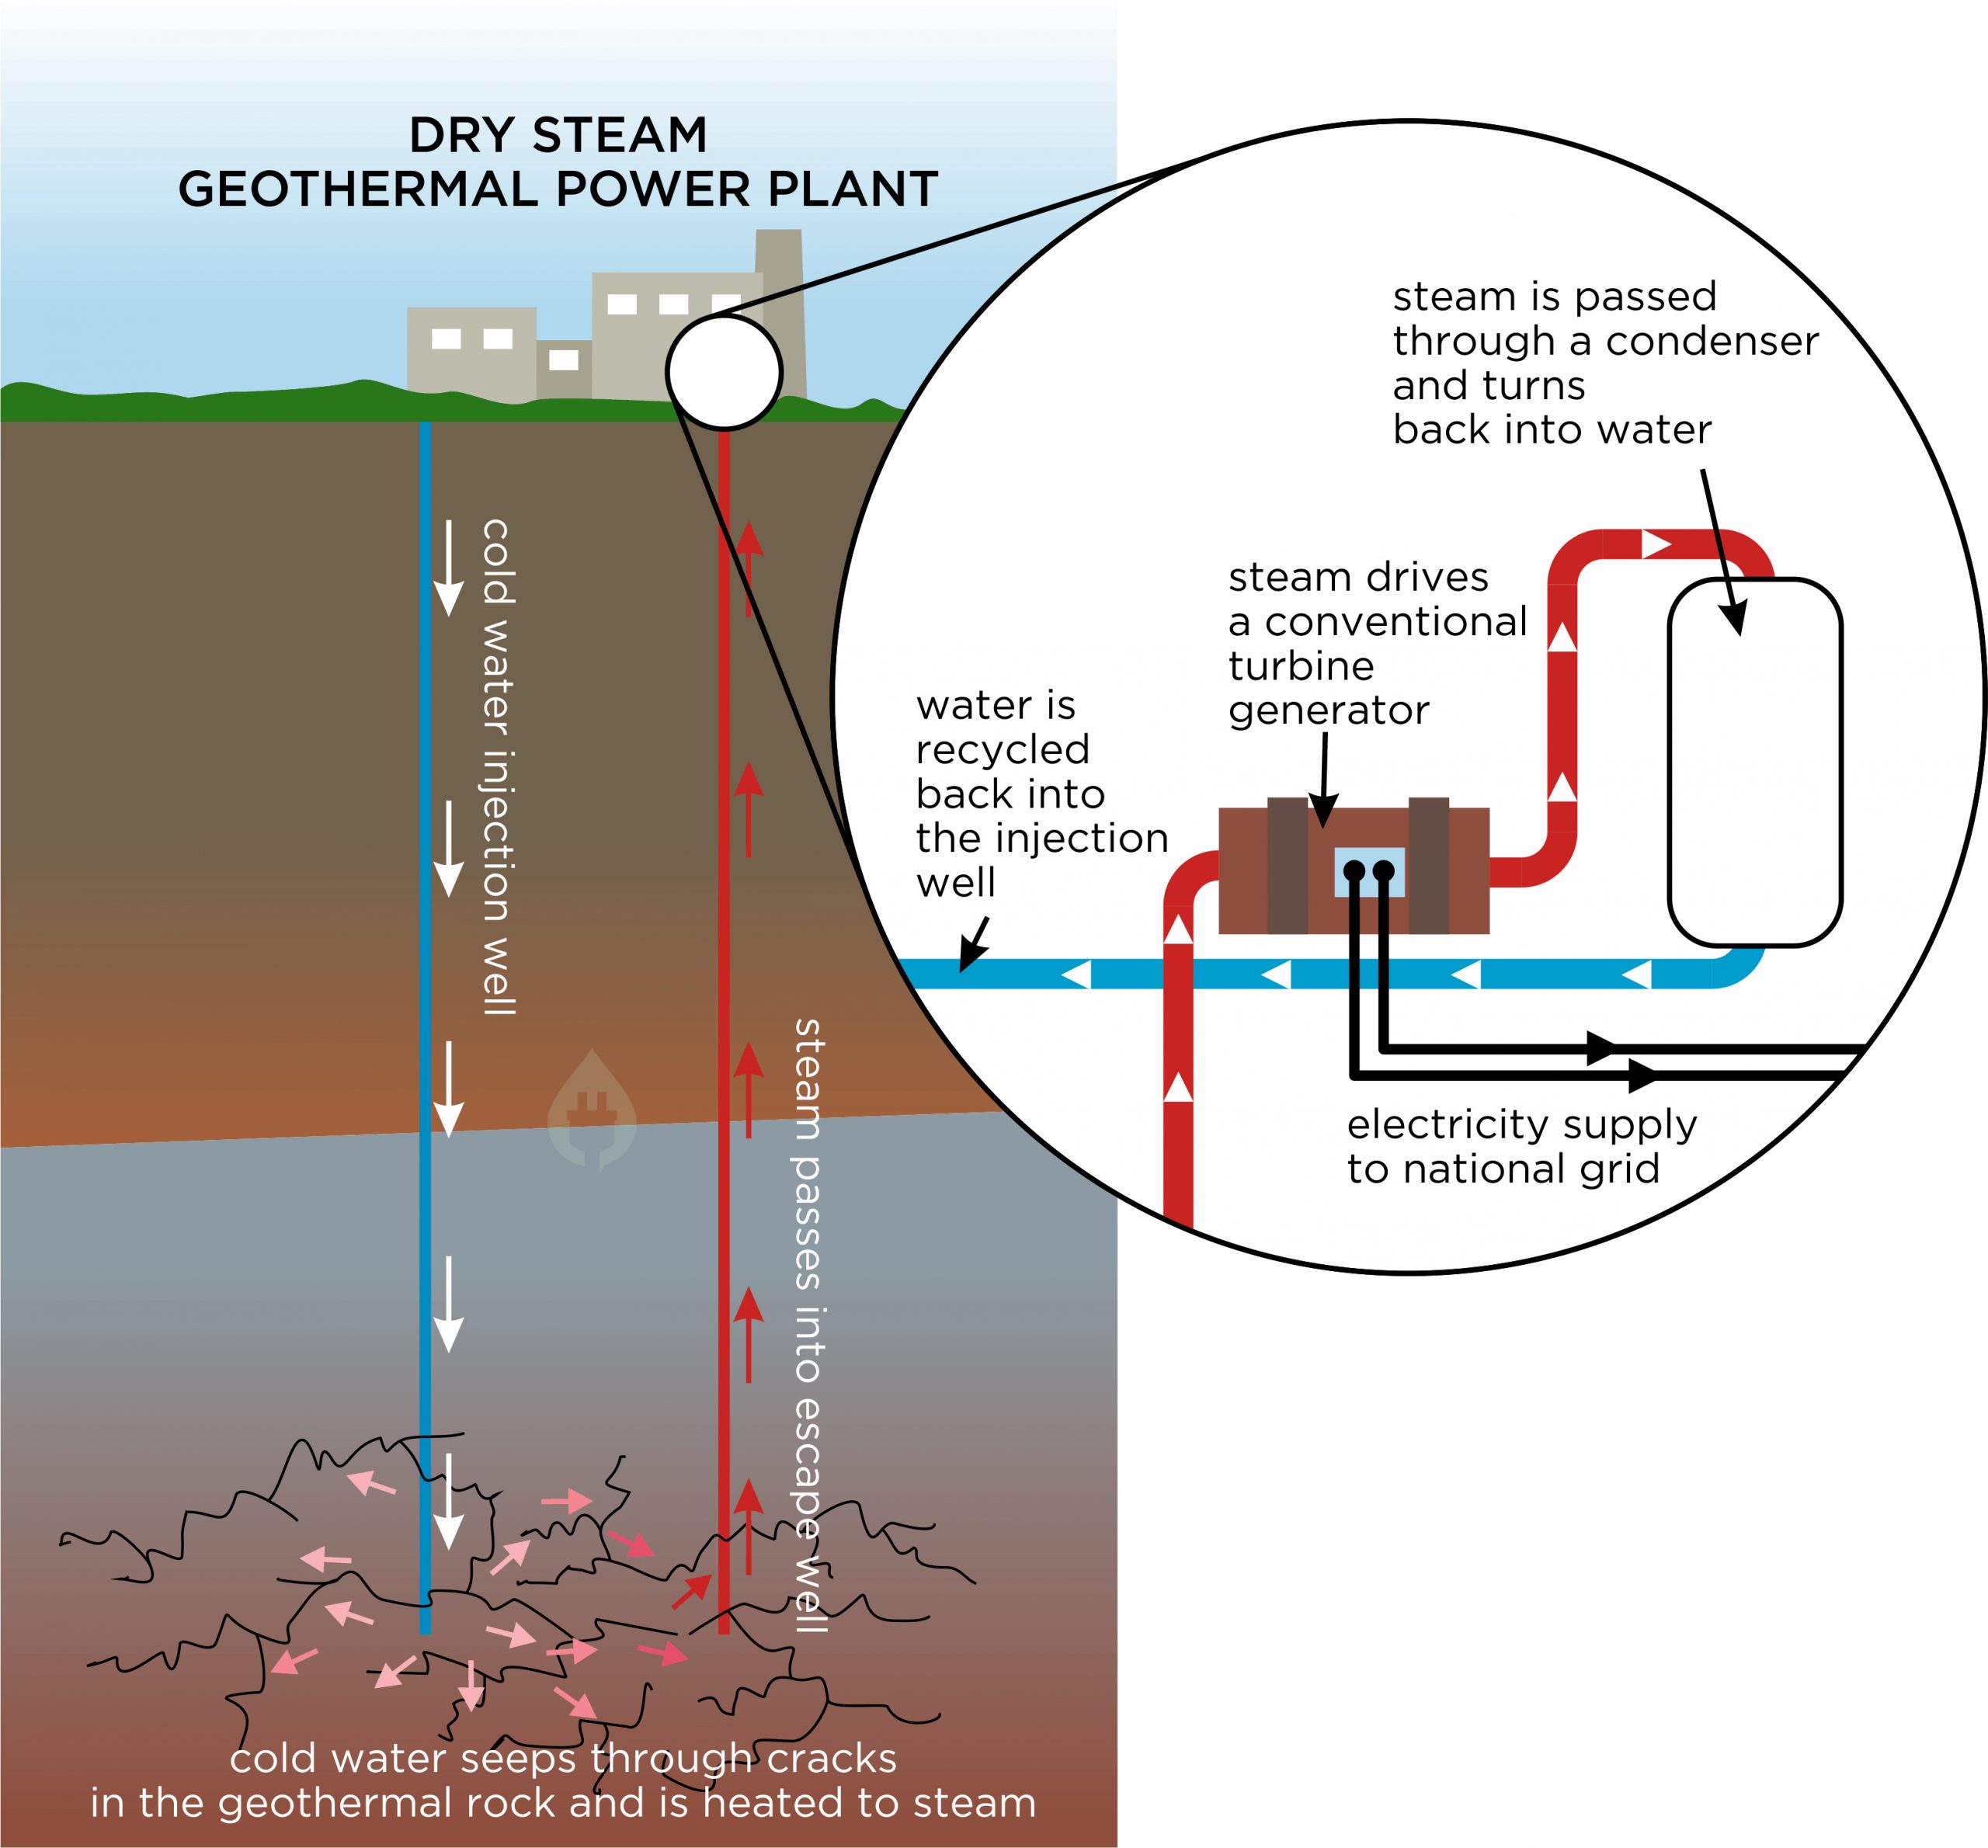 dry steam geothermal power plant